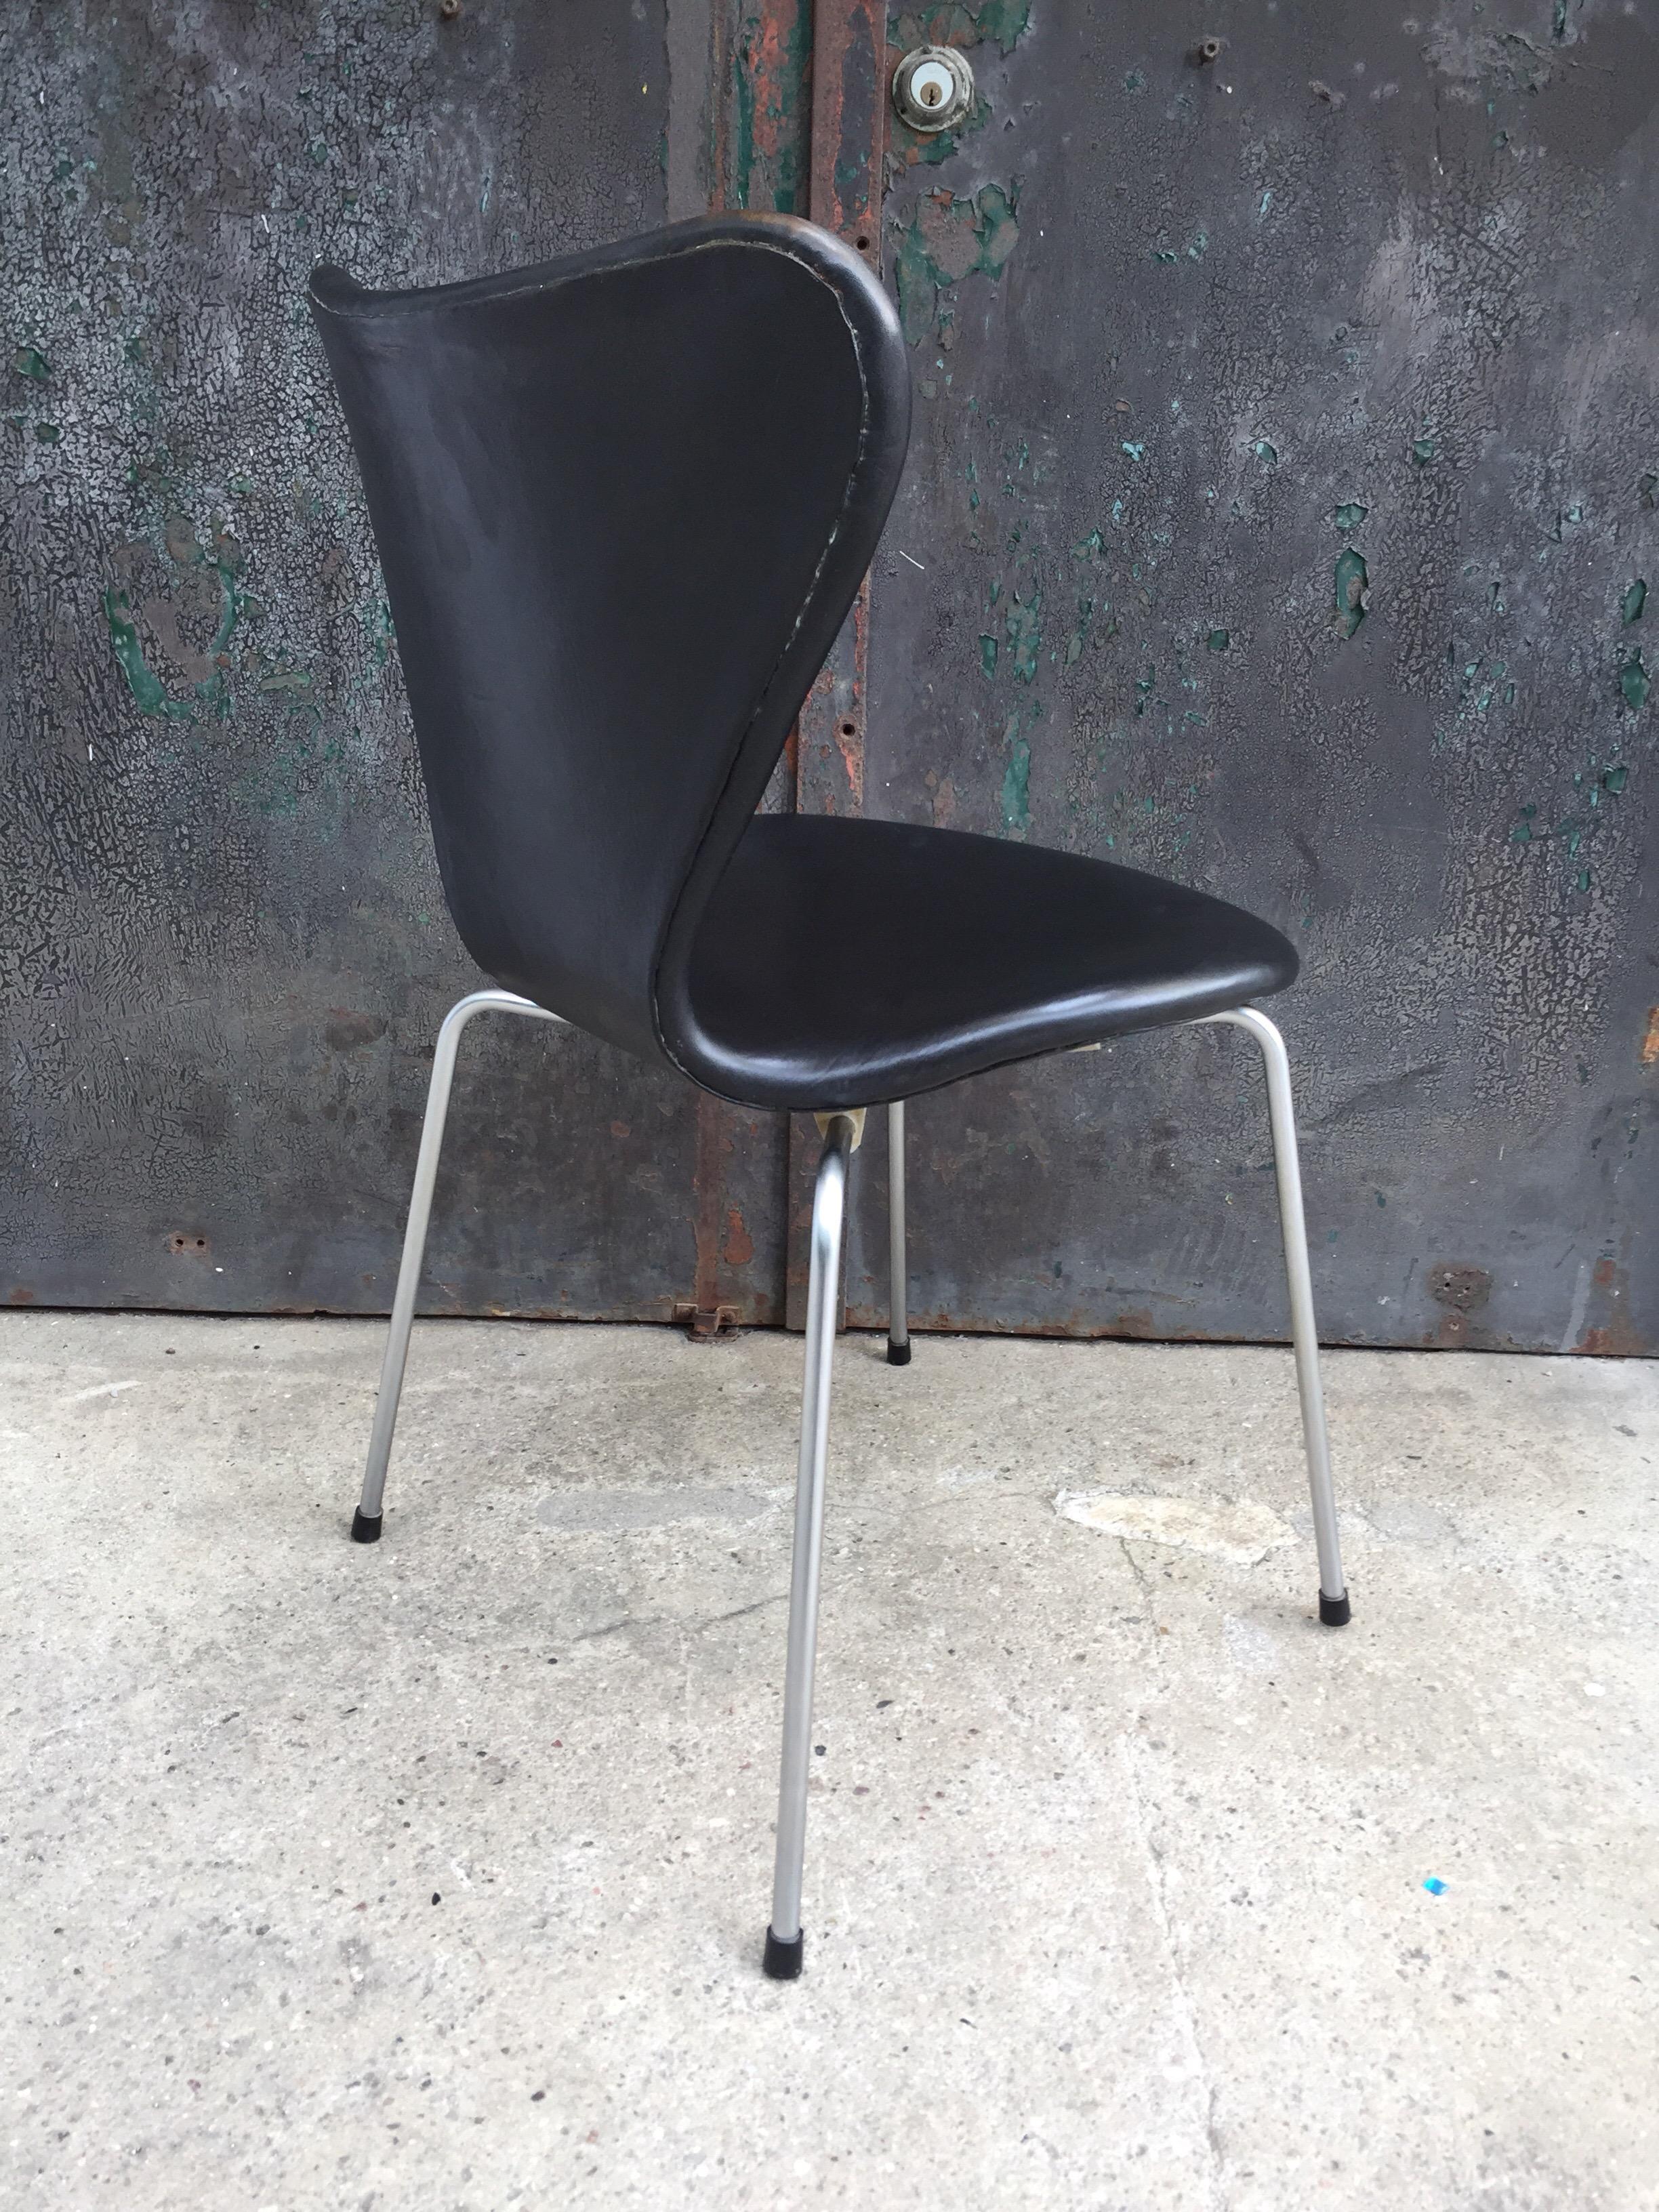 Steel Arne Jacobsen 3107 Chair Designed in 1955 in Original Black Leather